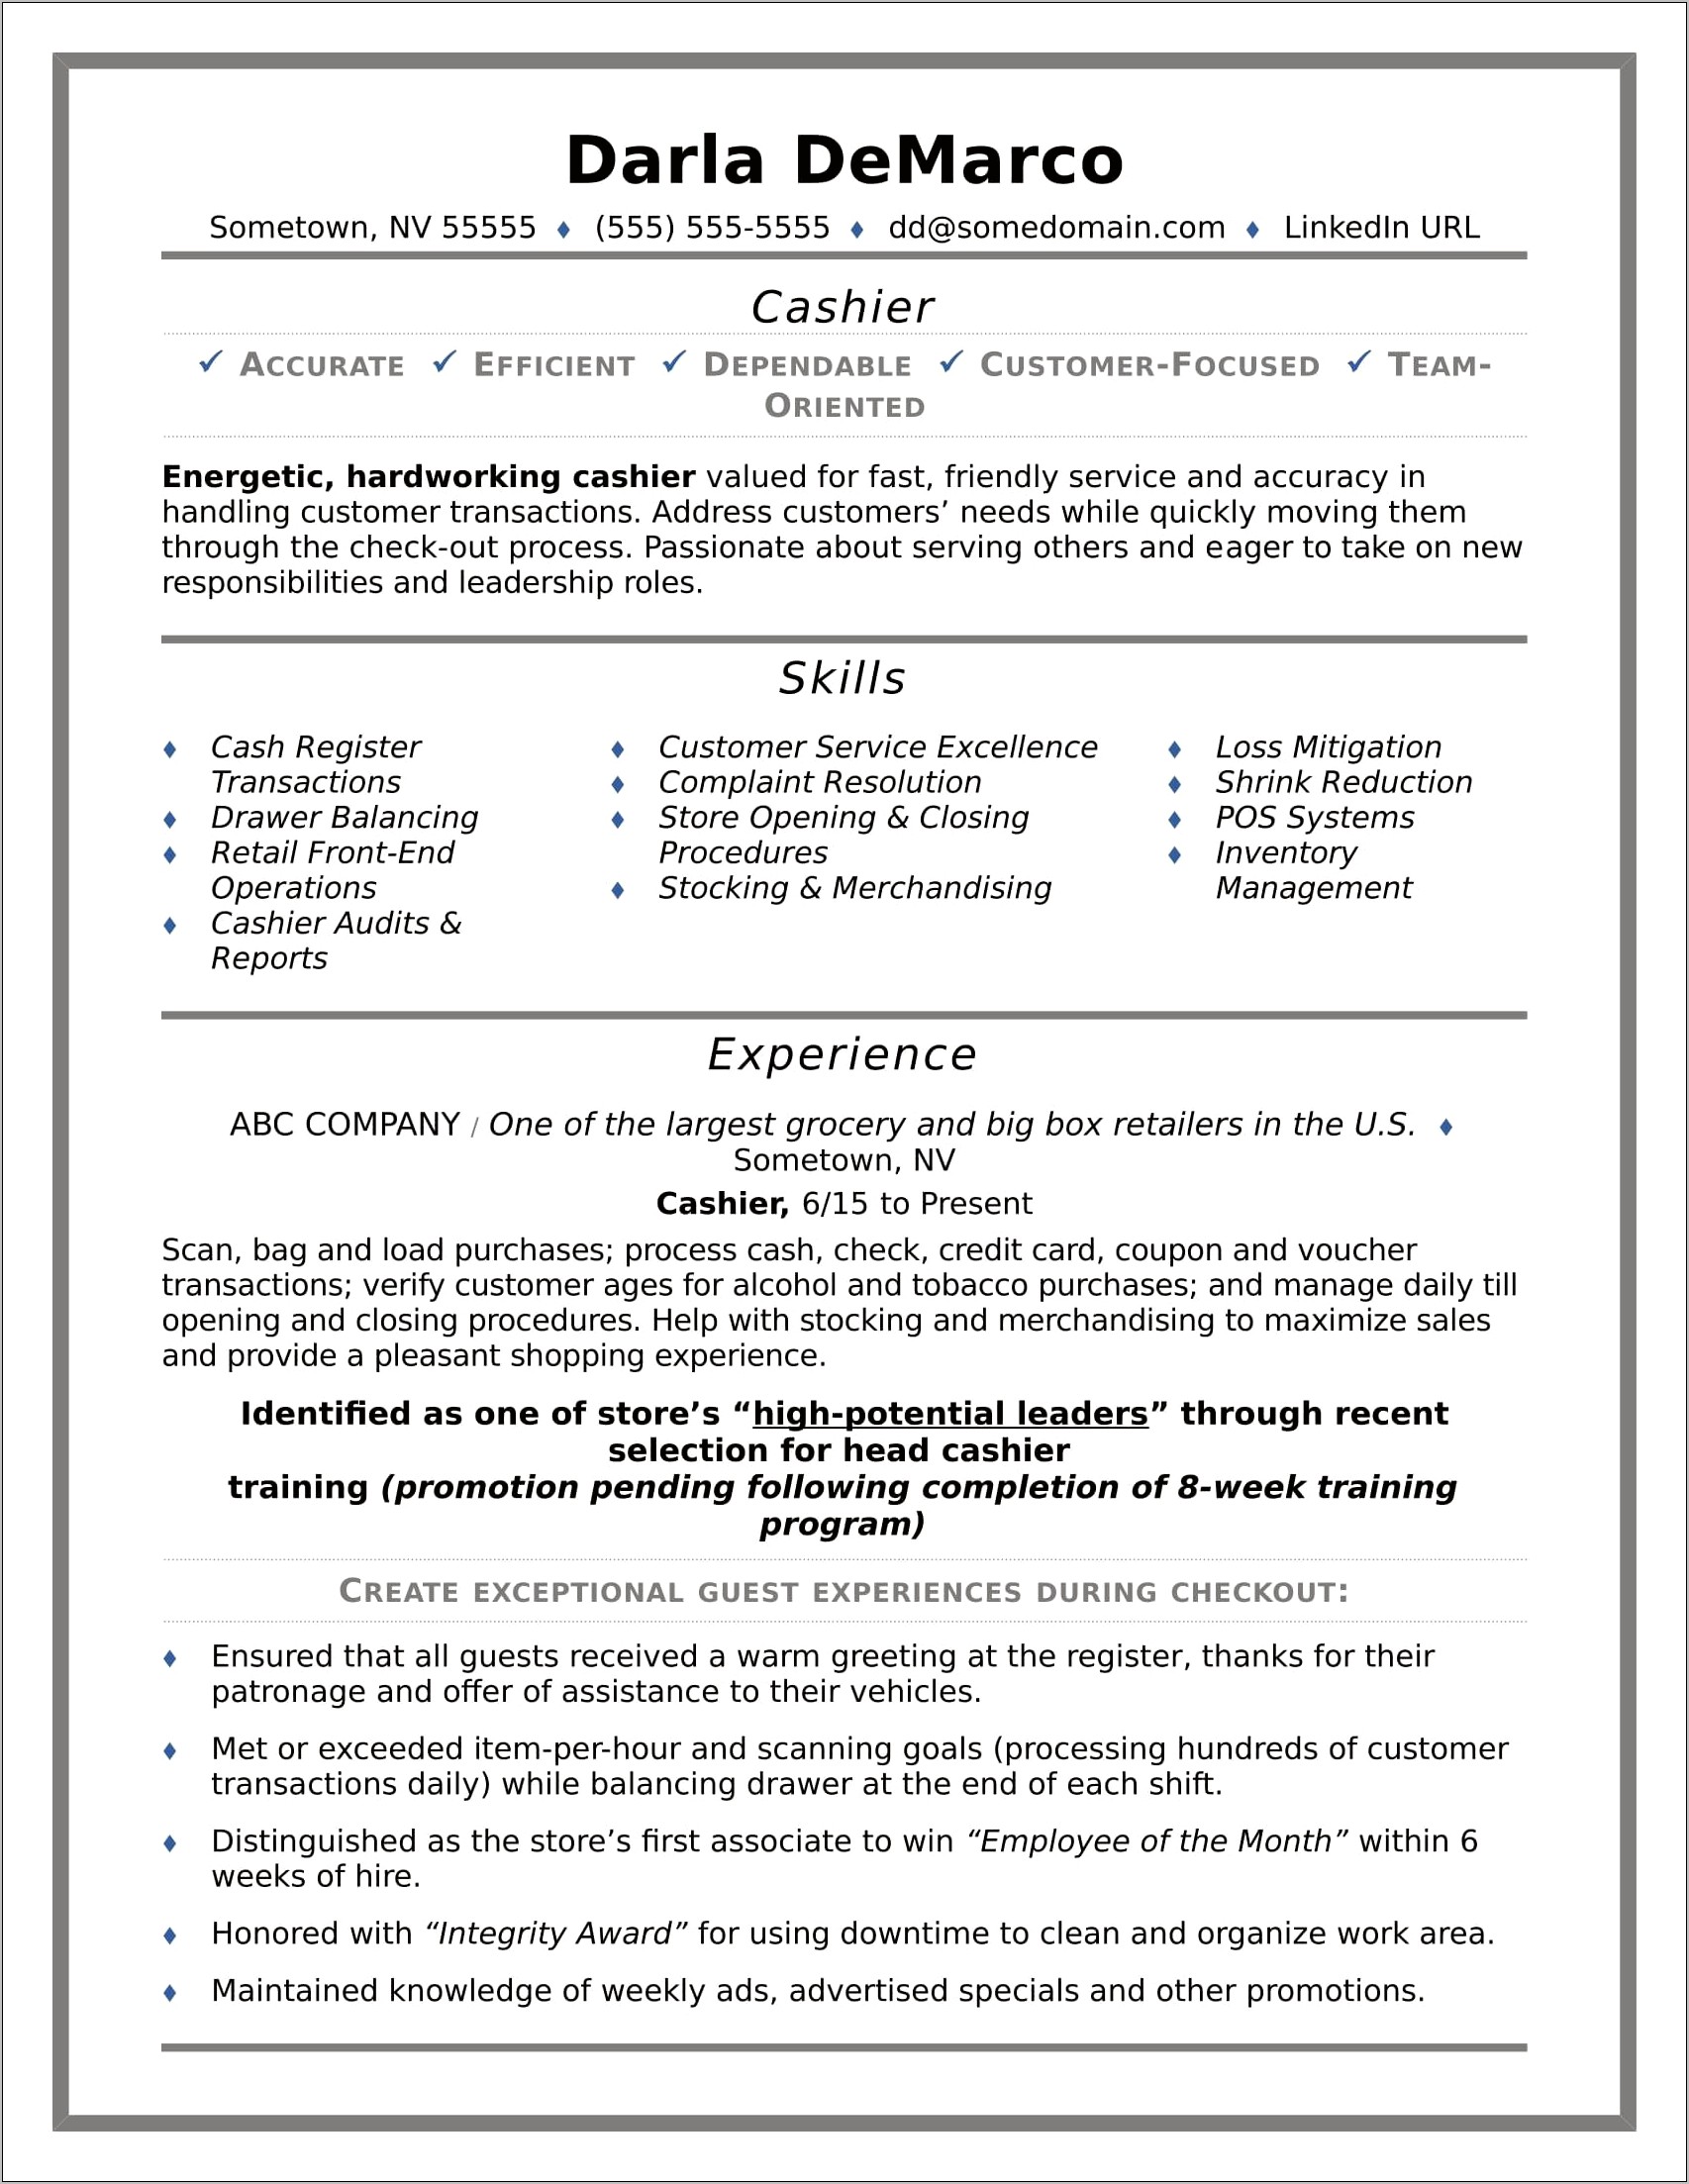 Copy Paste Resume Job Application Duties